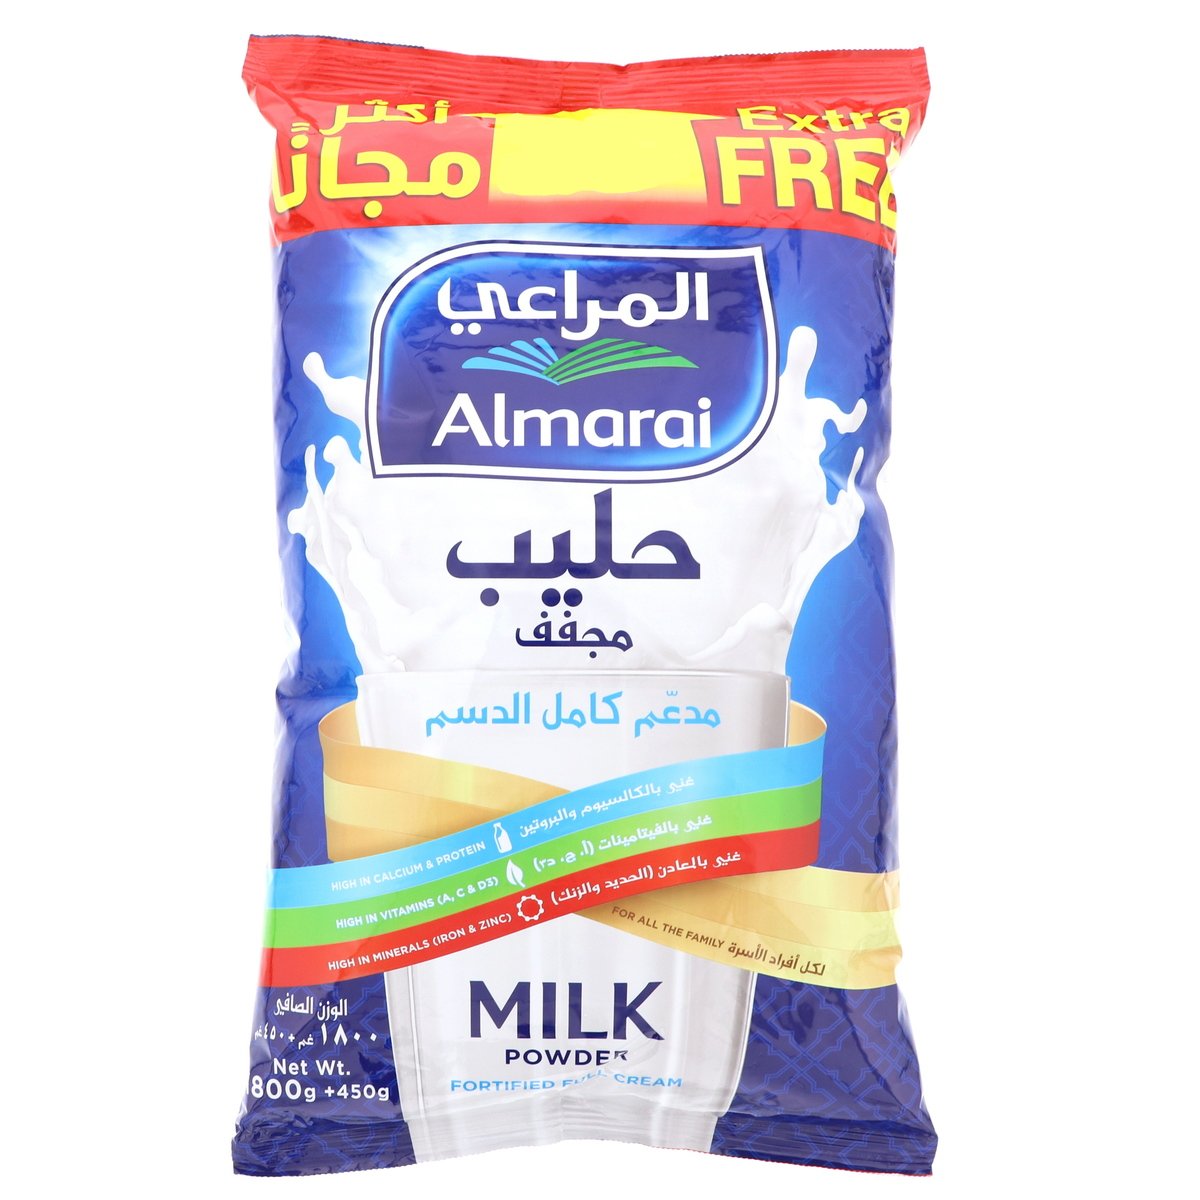 Almarai Fortified Full Cream Milk Powder 1.8 kg + 450 g